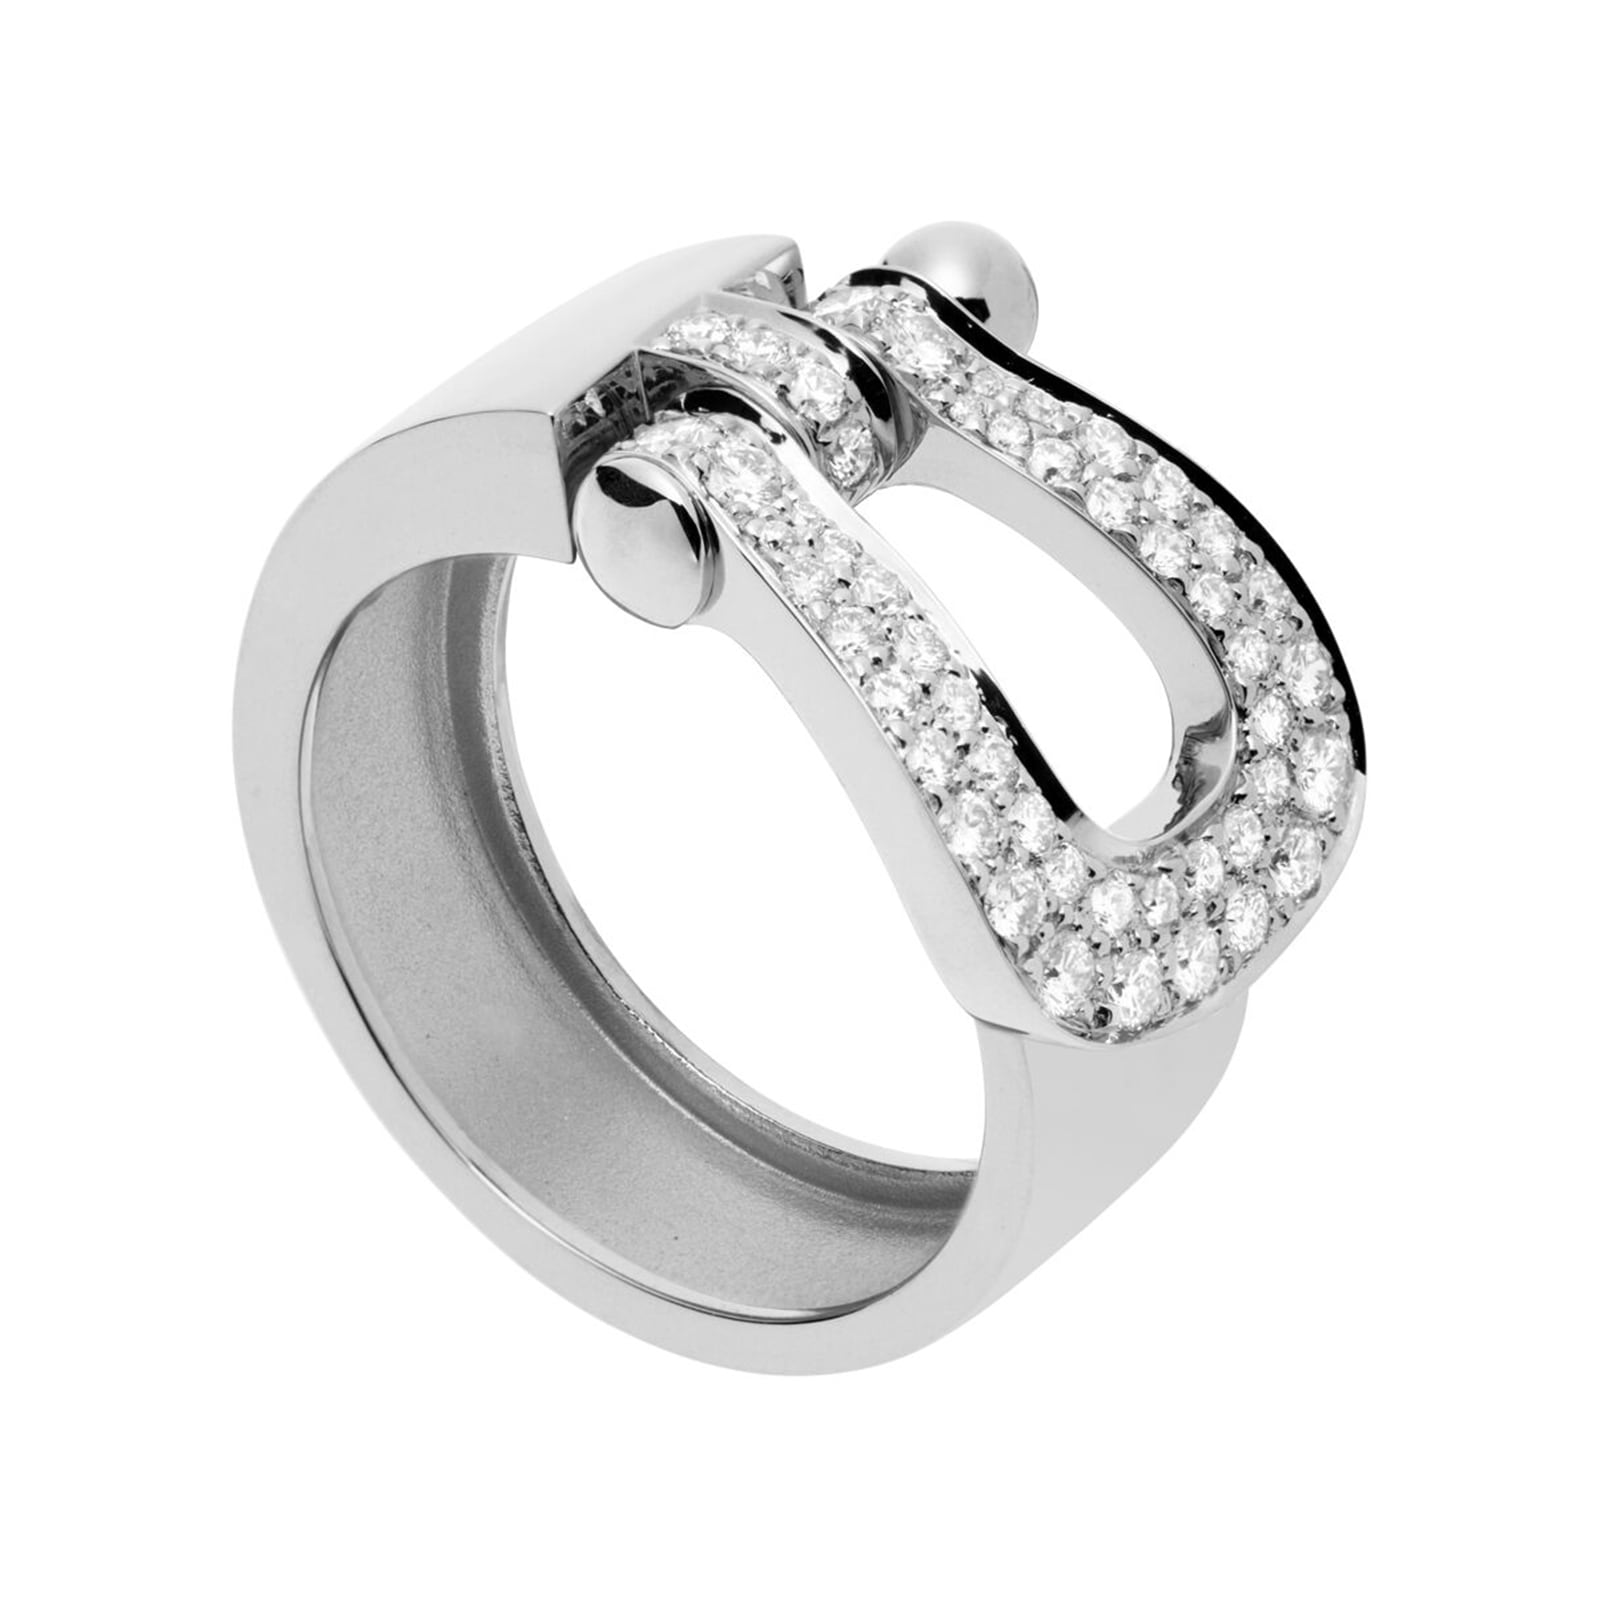 Force 10 18ct White Gold 0.49ct Diamond Ring - Ring Size K